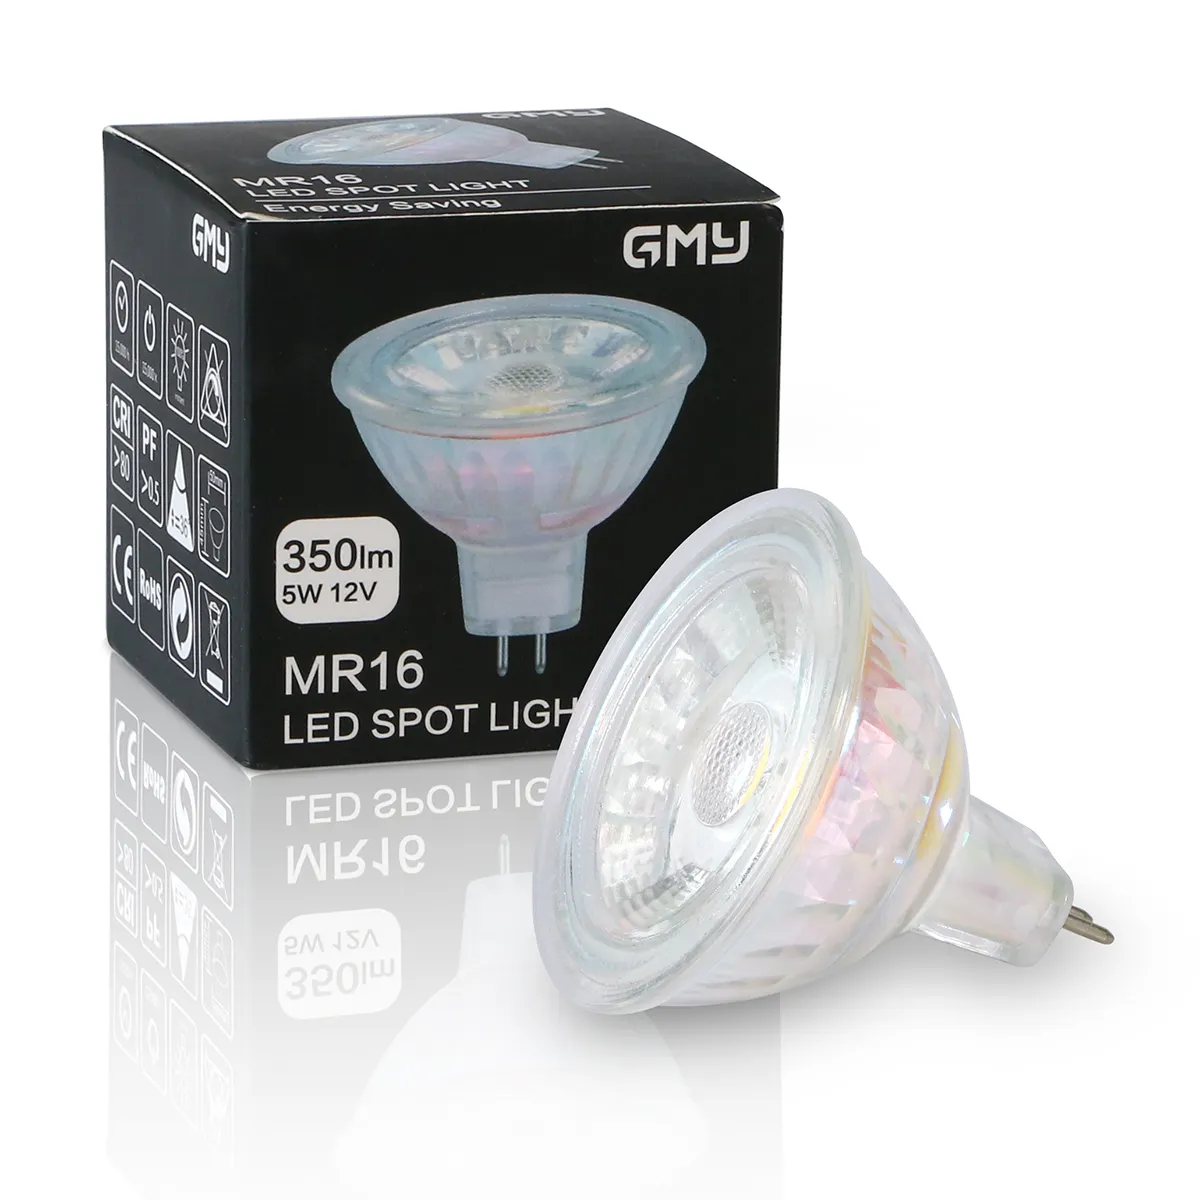 Energy saving Mr16 LED bulb 12V 5W GU5.3 GU10 MR16 housing mr16 led light 3W 5W 7W MR16 Led Spotlight